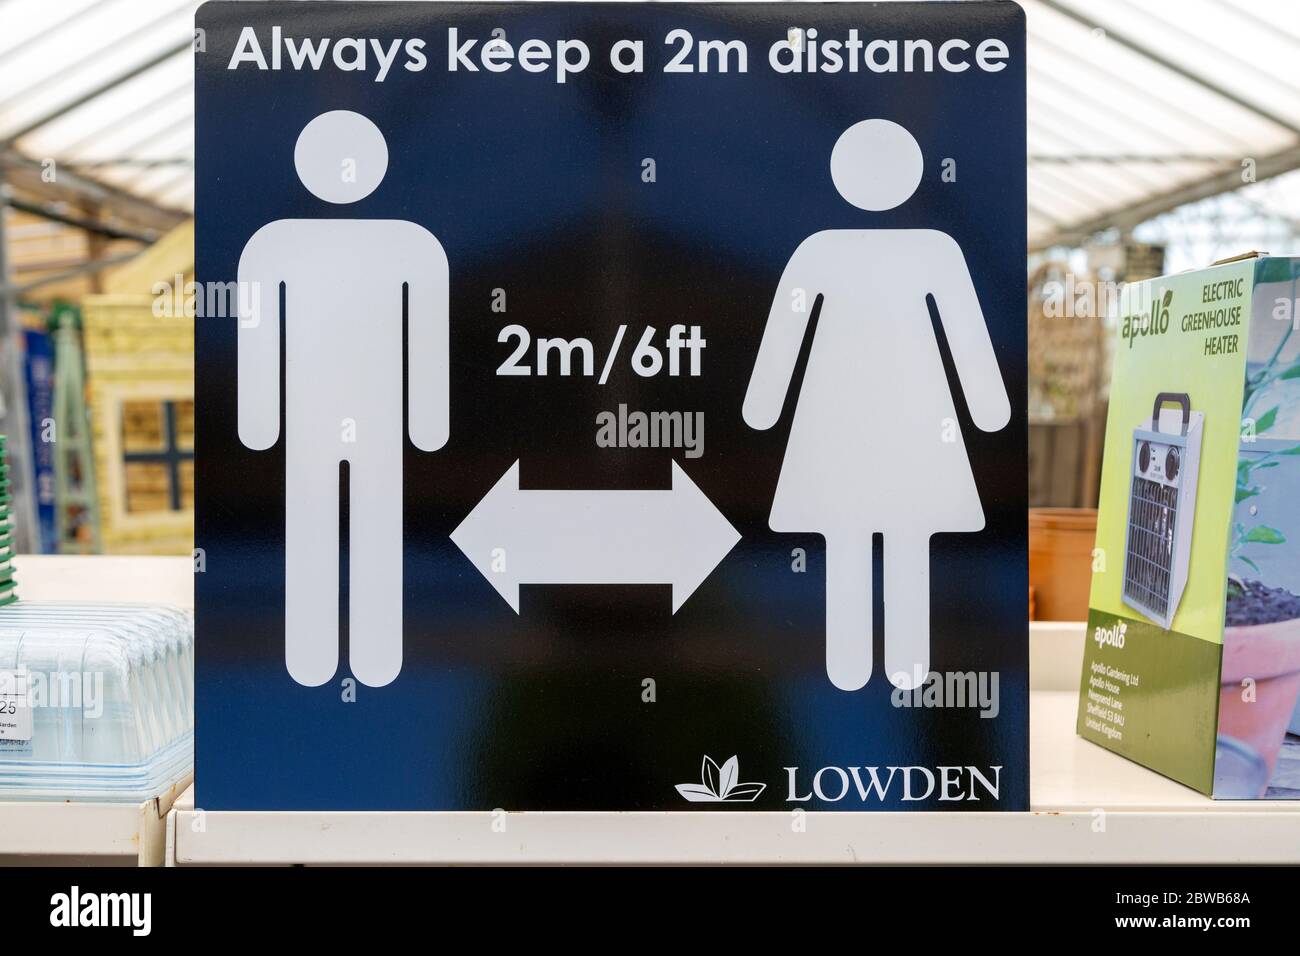 Social Distancing 2 metres apart information notice sign in Lowden garden centre shop, Wiltshire, England, UK, May 2020 Stock Photo